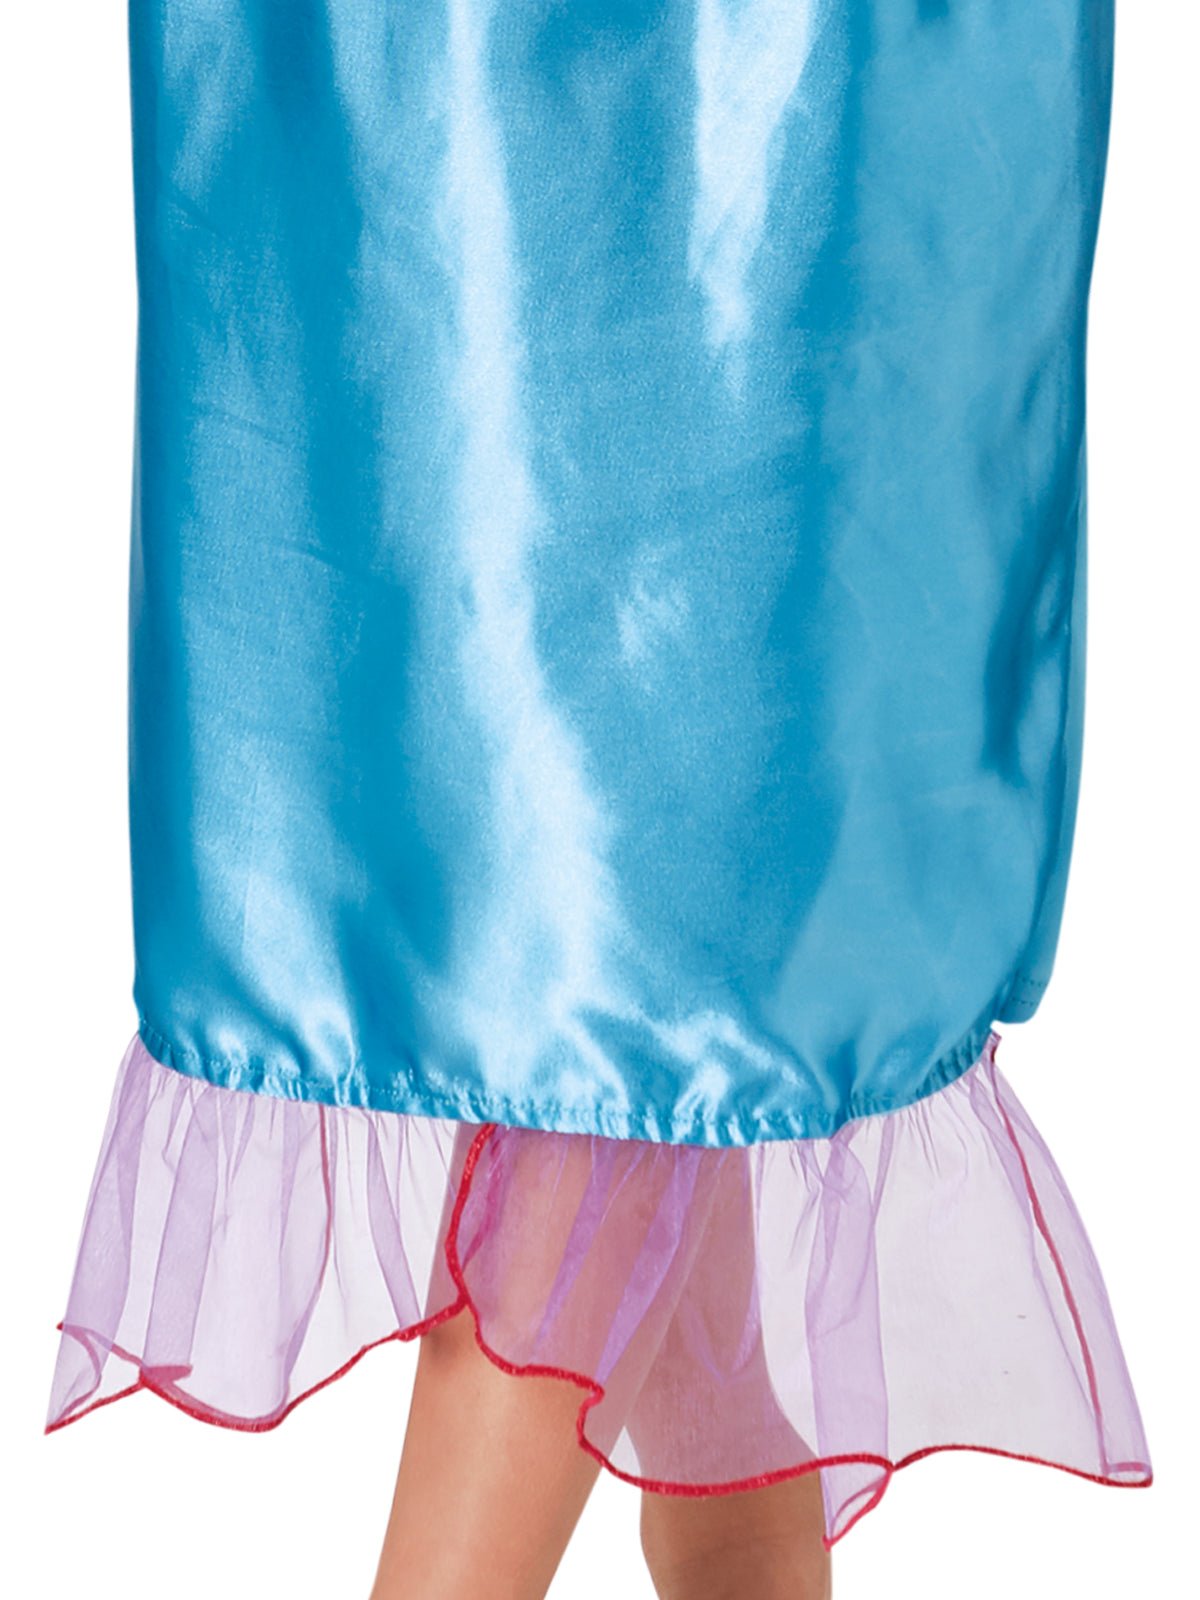 Skirt view Kids Ariel Sequin Mermaid Classic Costume